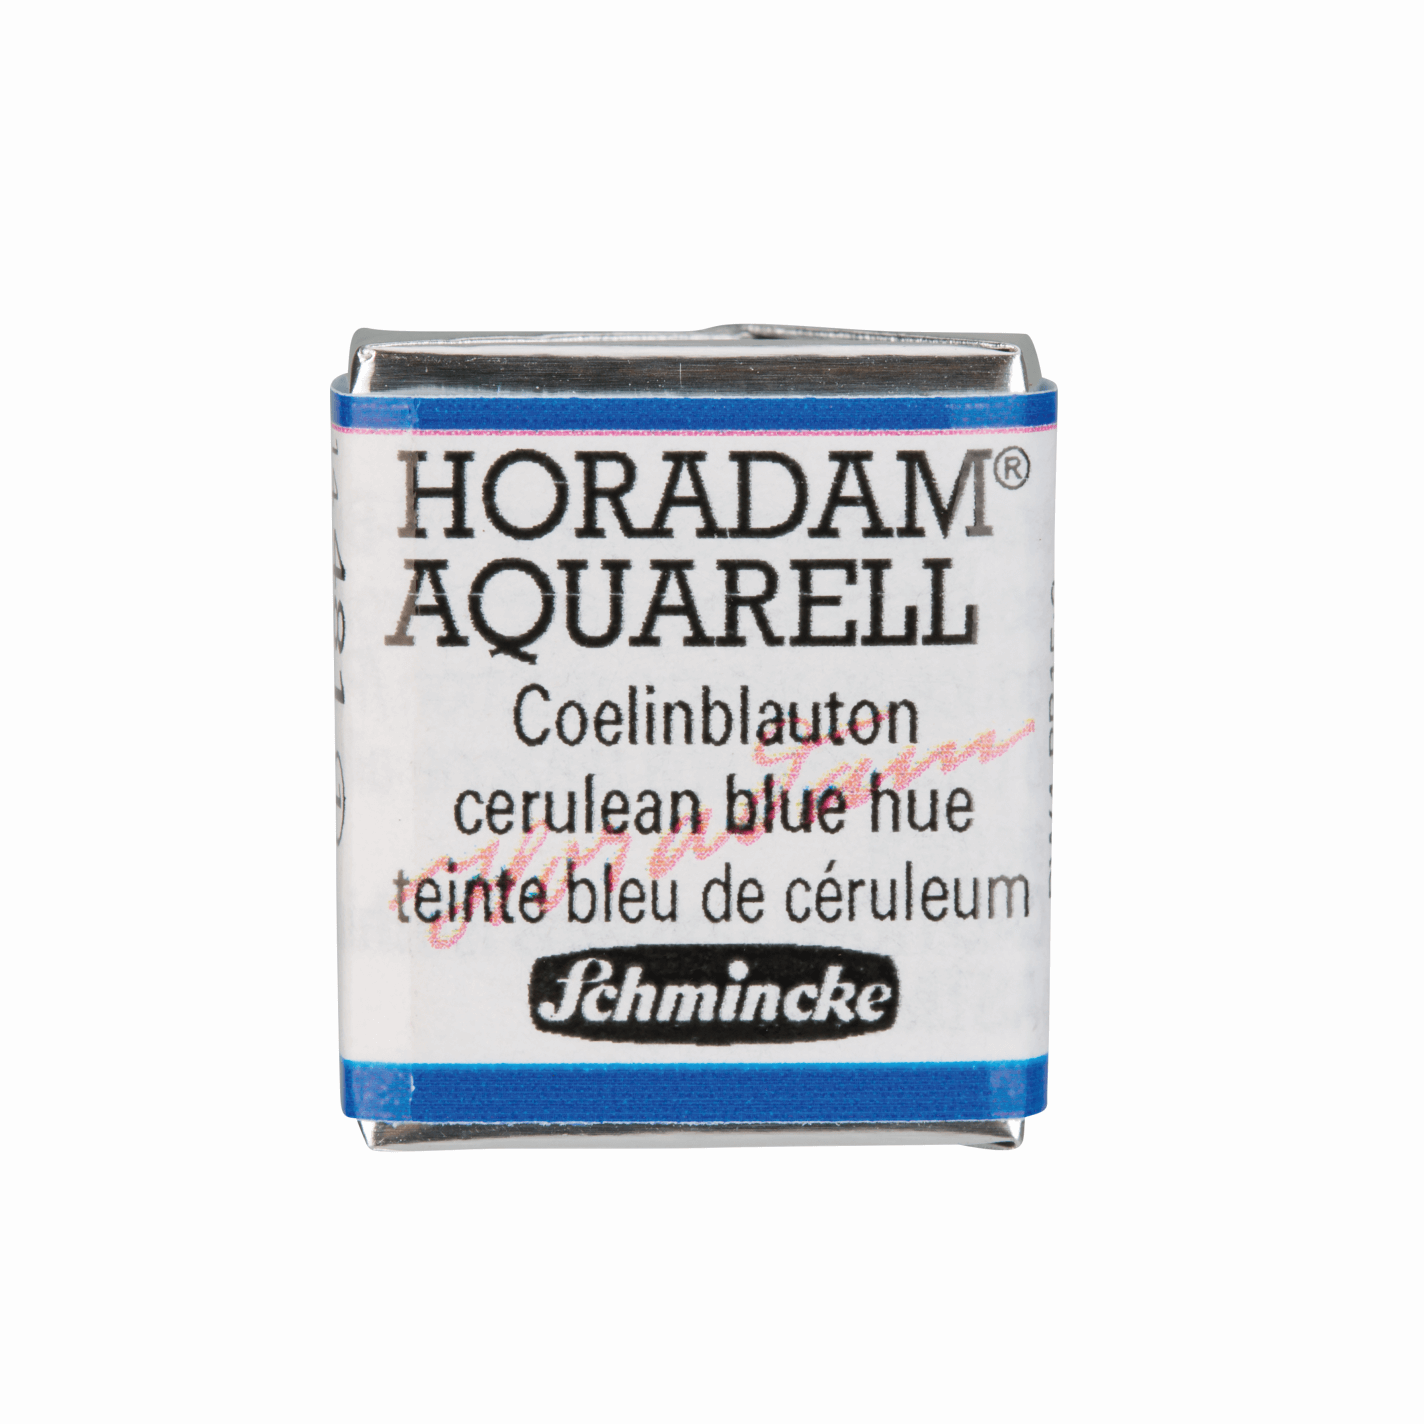 Schmincke Horadam Aquarell pans 1/2 pan Cerulean Blue Hue